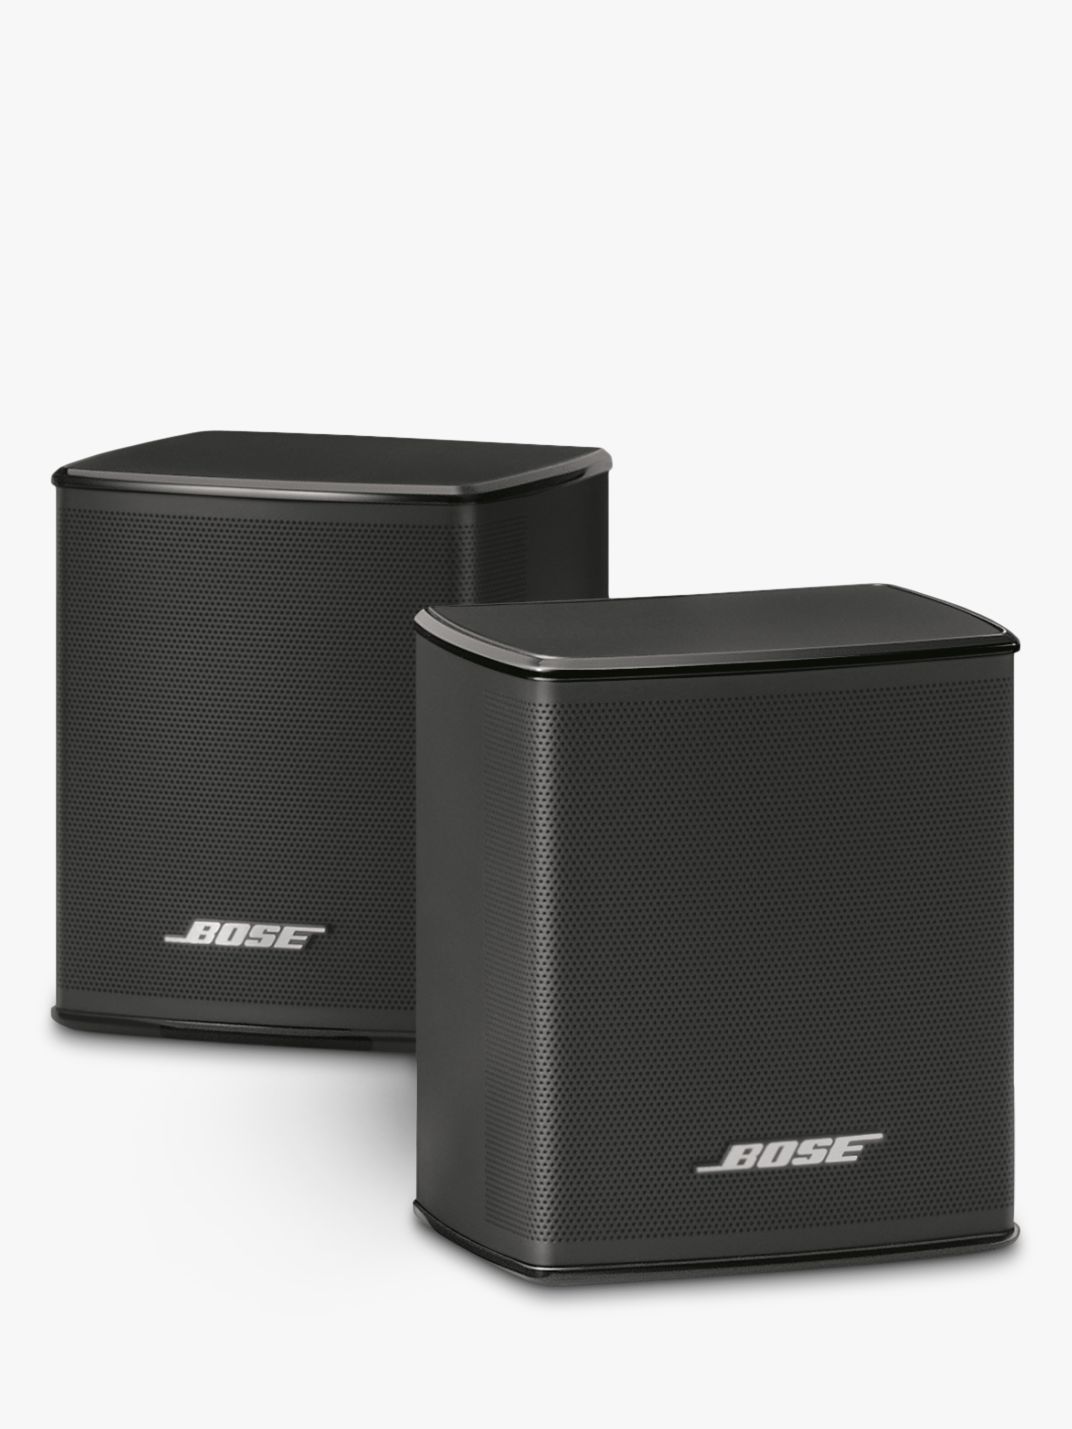 Bose 15 Xxx Hd - Bose Surround Speakers, Black